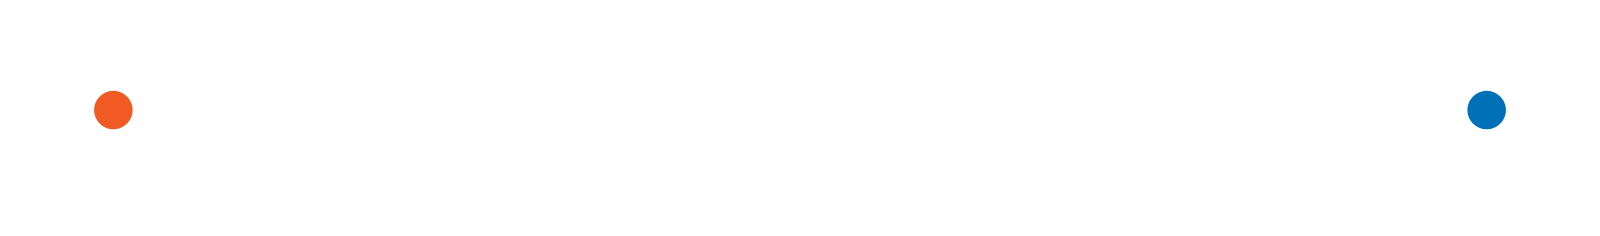 Almena's logo